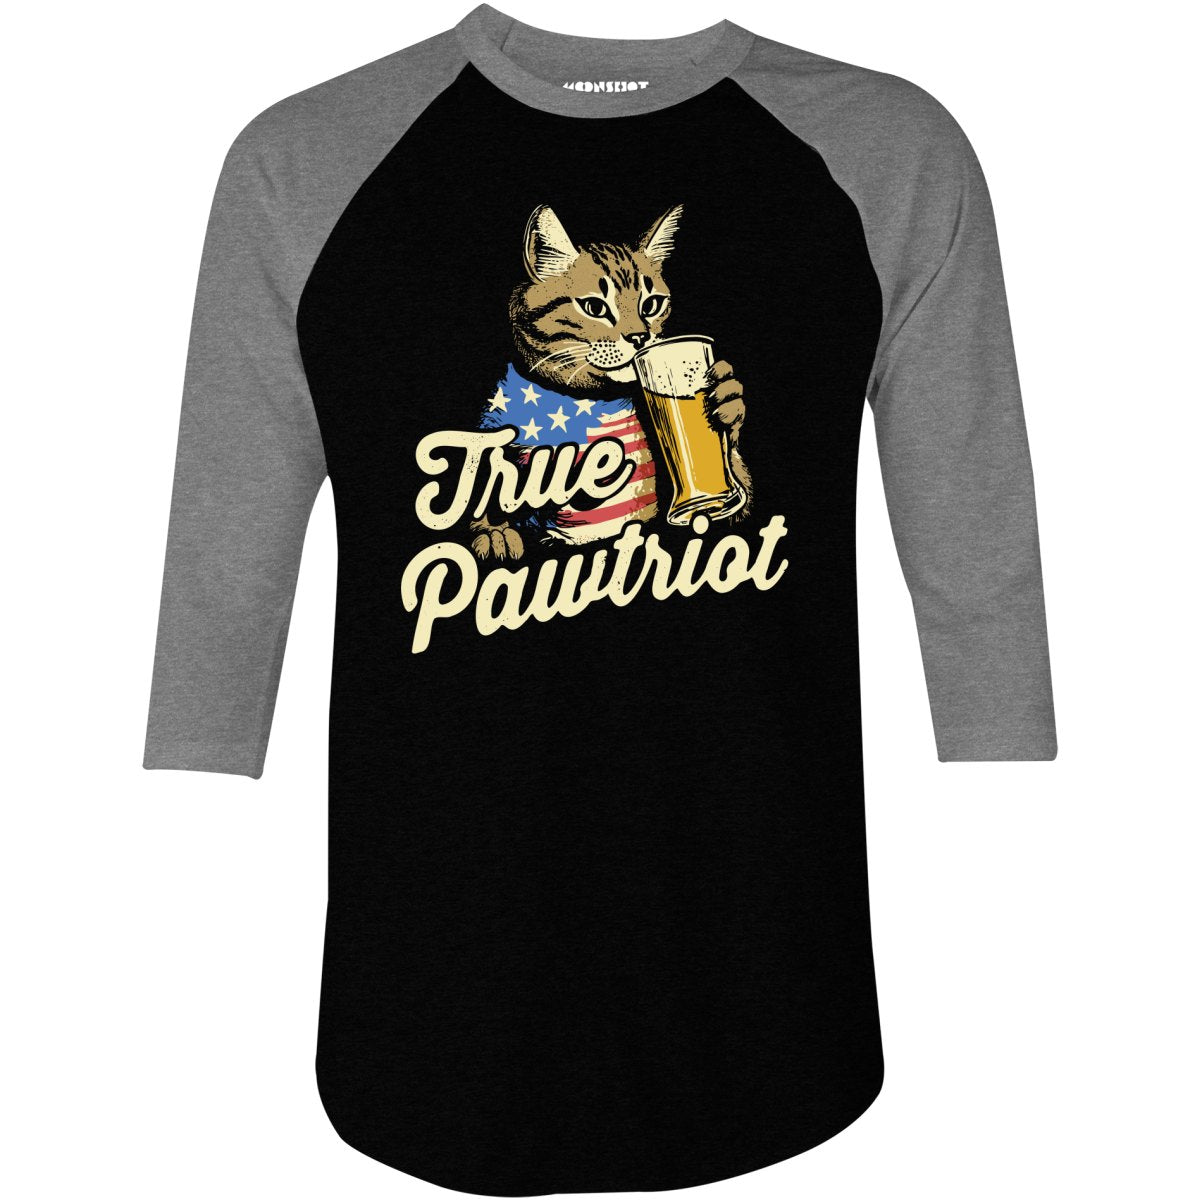 True Pawtriot - 3/4 Sleeve Raglan T-Shirt